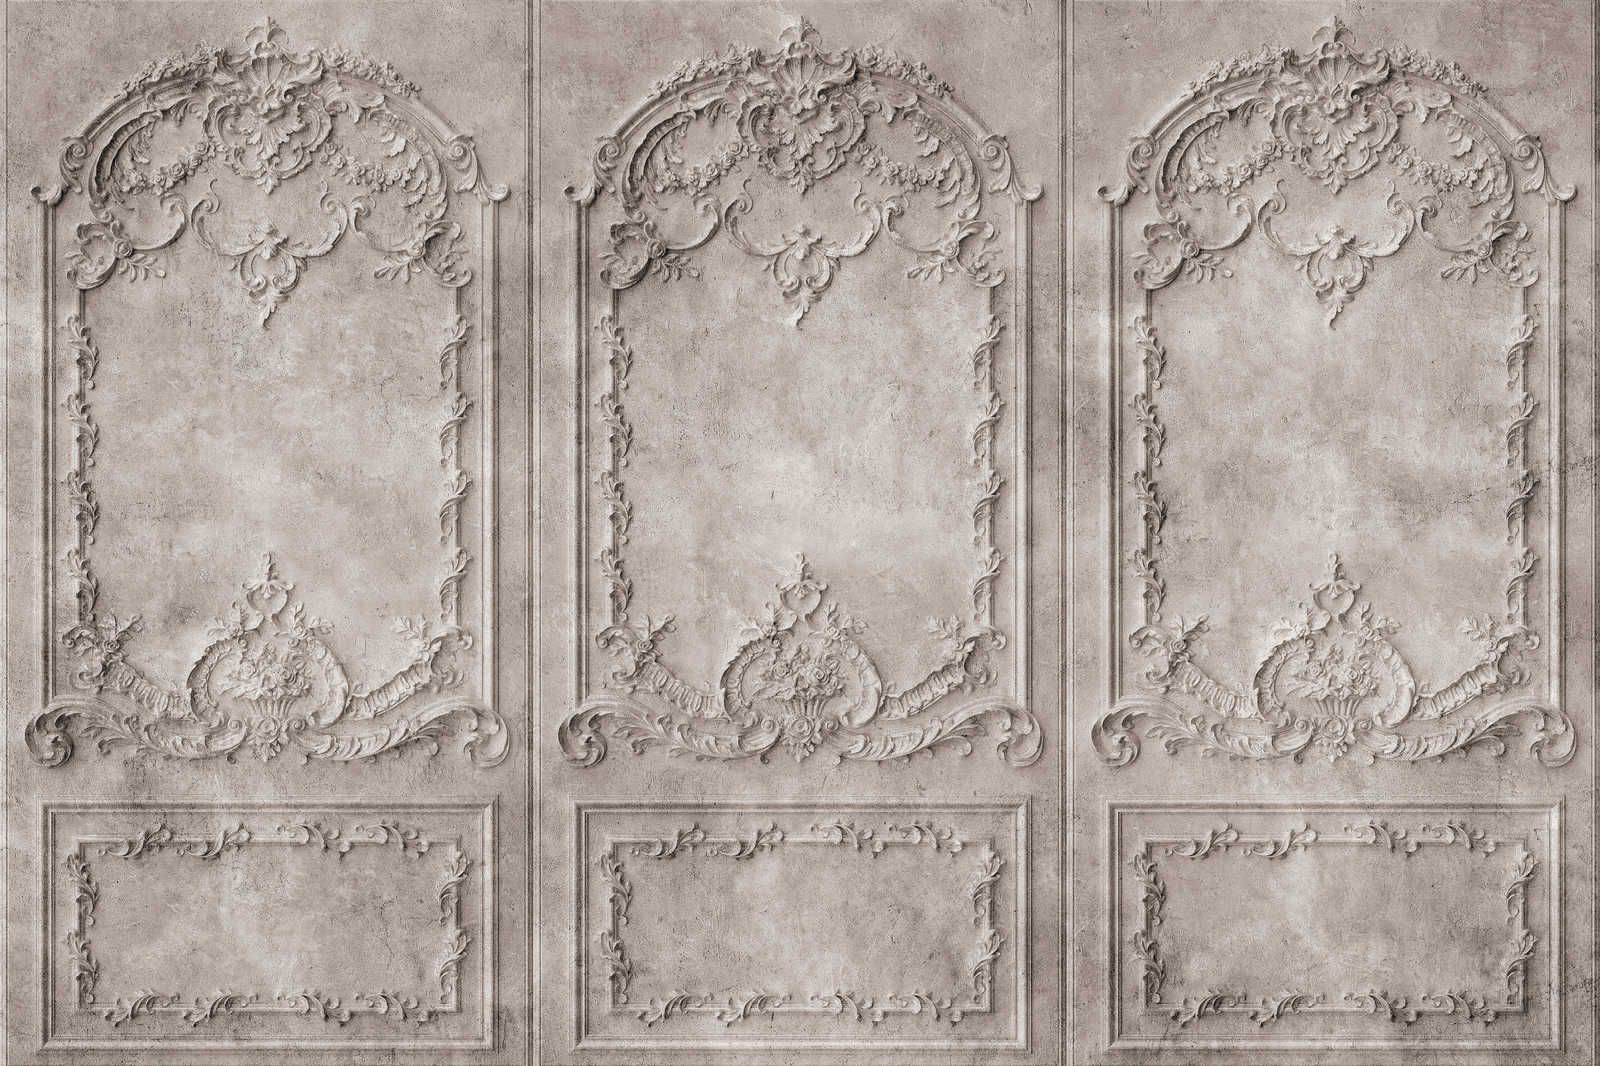             Versailles 1 - Leinwandbild Grau-Braun Holz-Paneele im Barock Stil – 0,90 m x 0,60 m
        